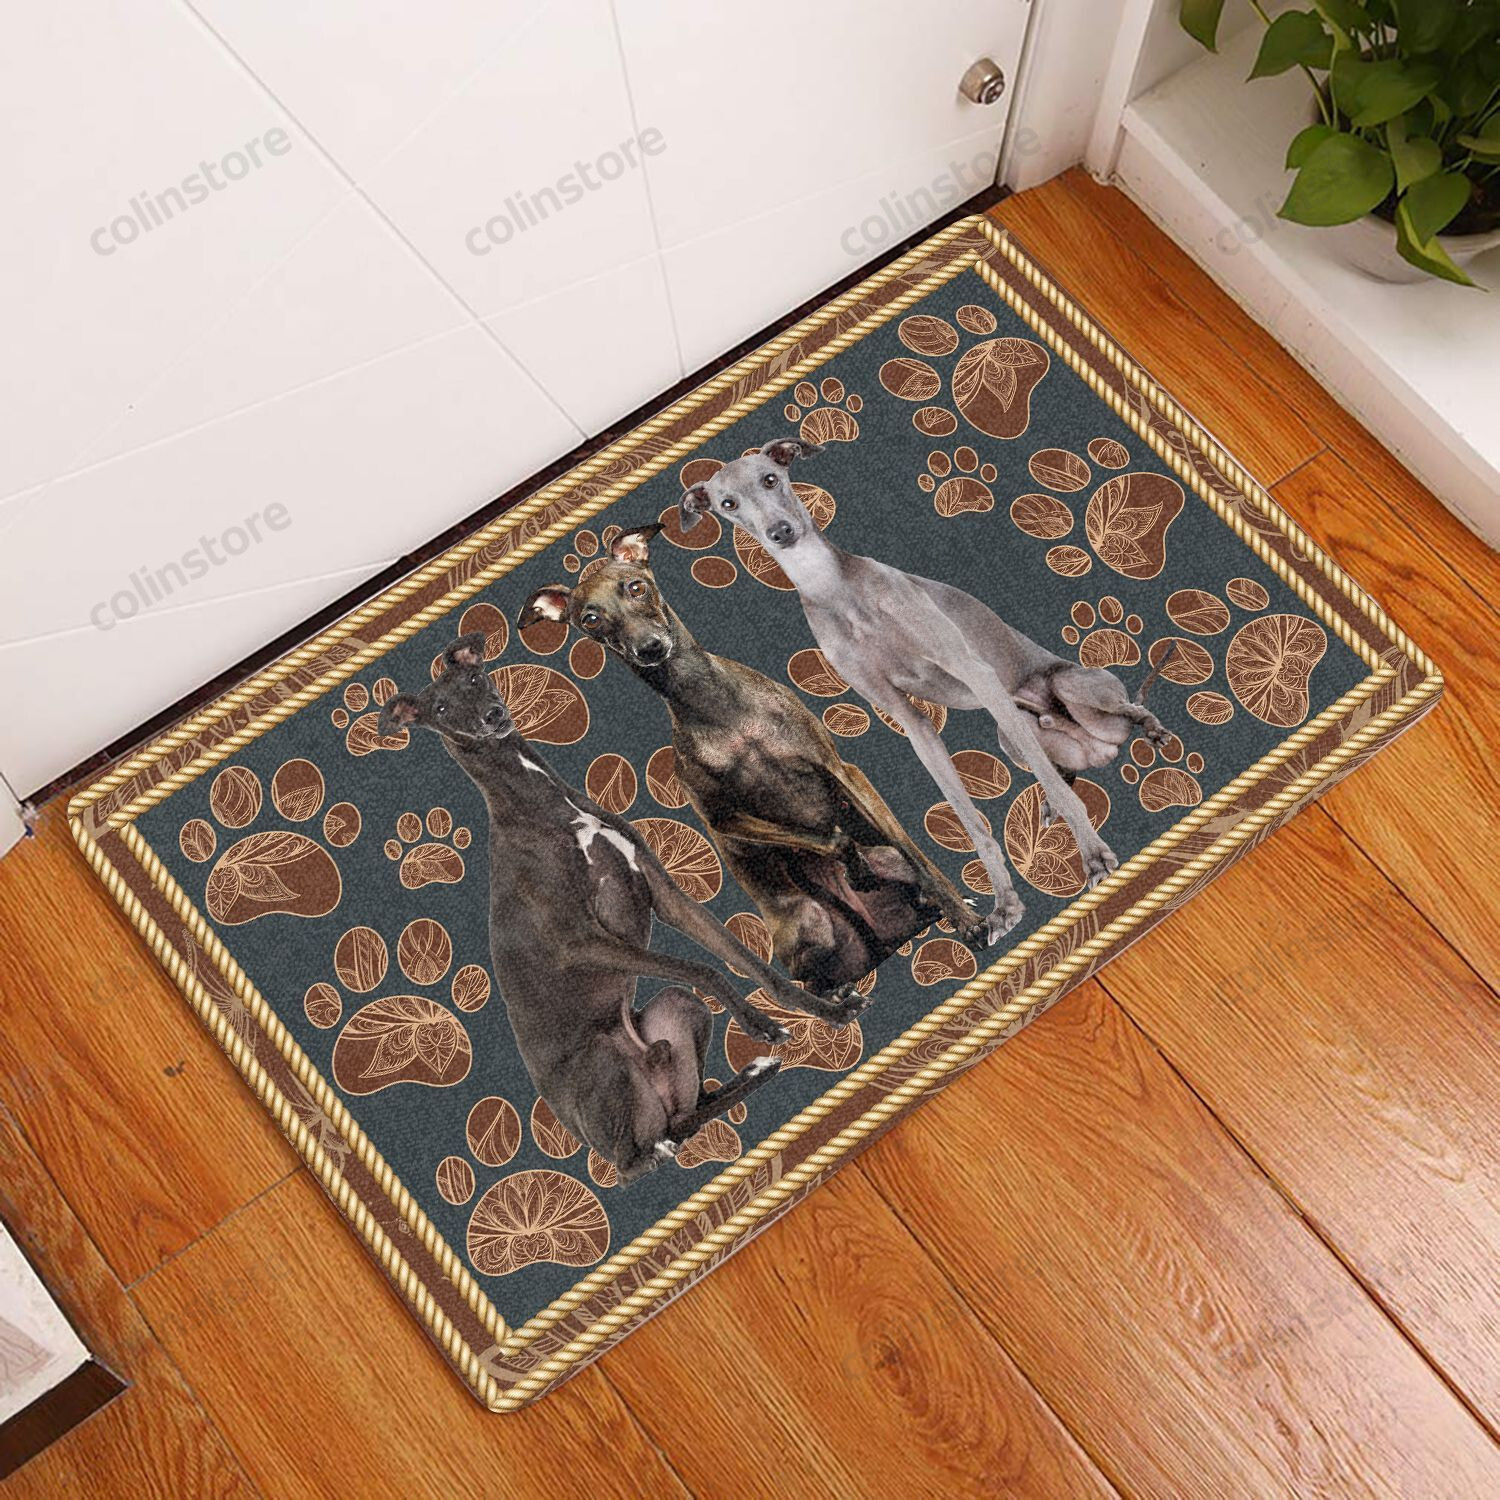 Italian Greyhound Floral Paw - Dog Doormat Welcome Mat